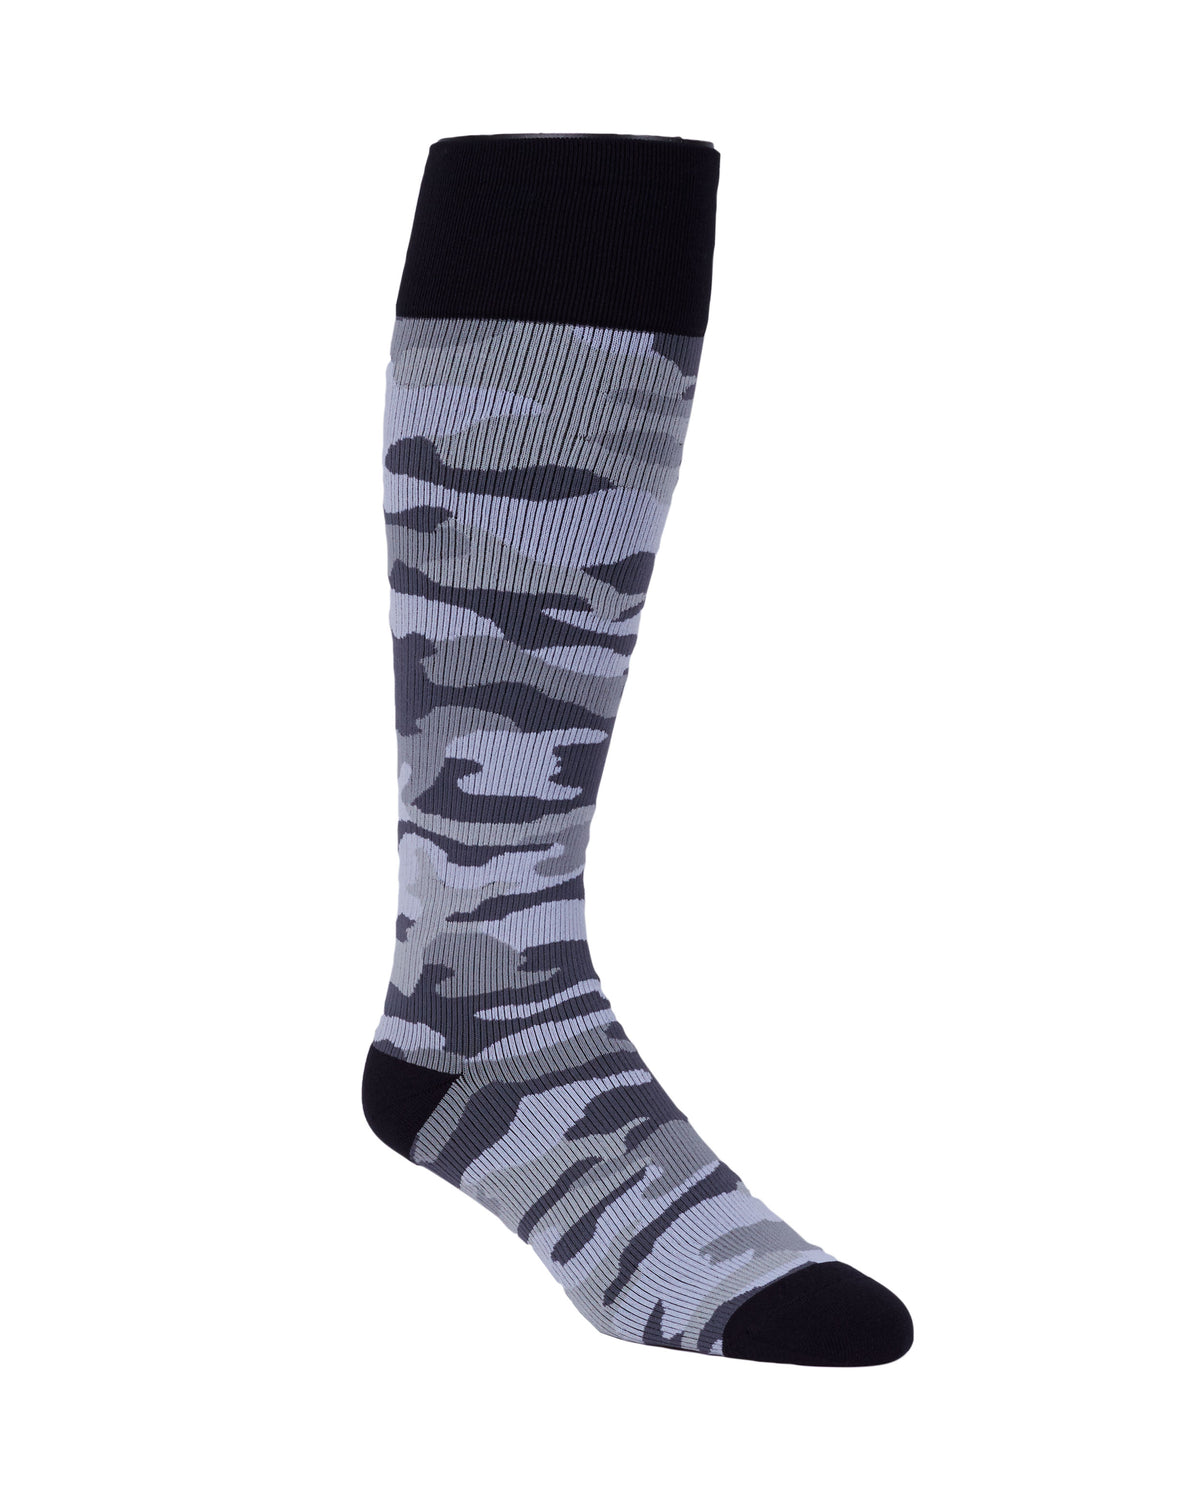 Rejuva Camo Unisex Knee High 20-30 mmHg Compression Socks